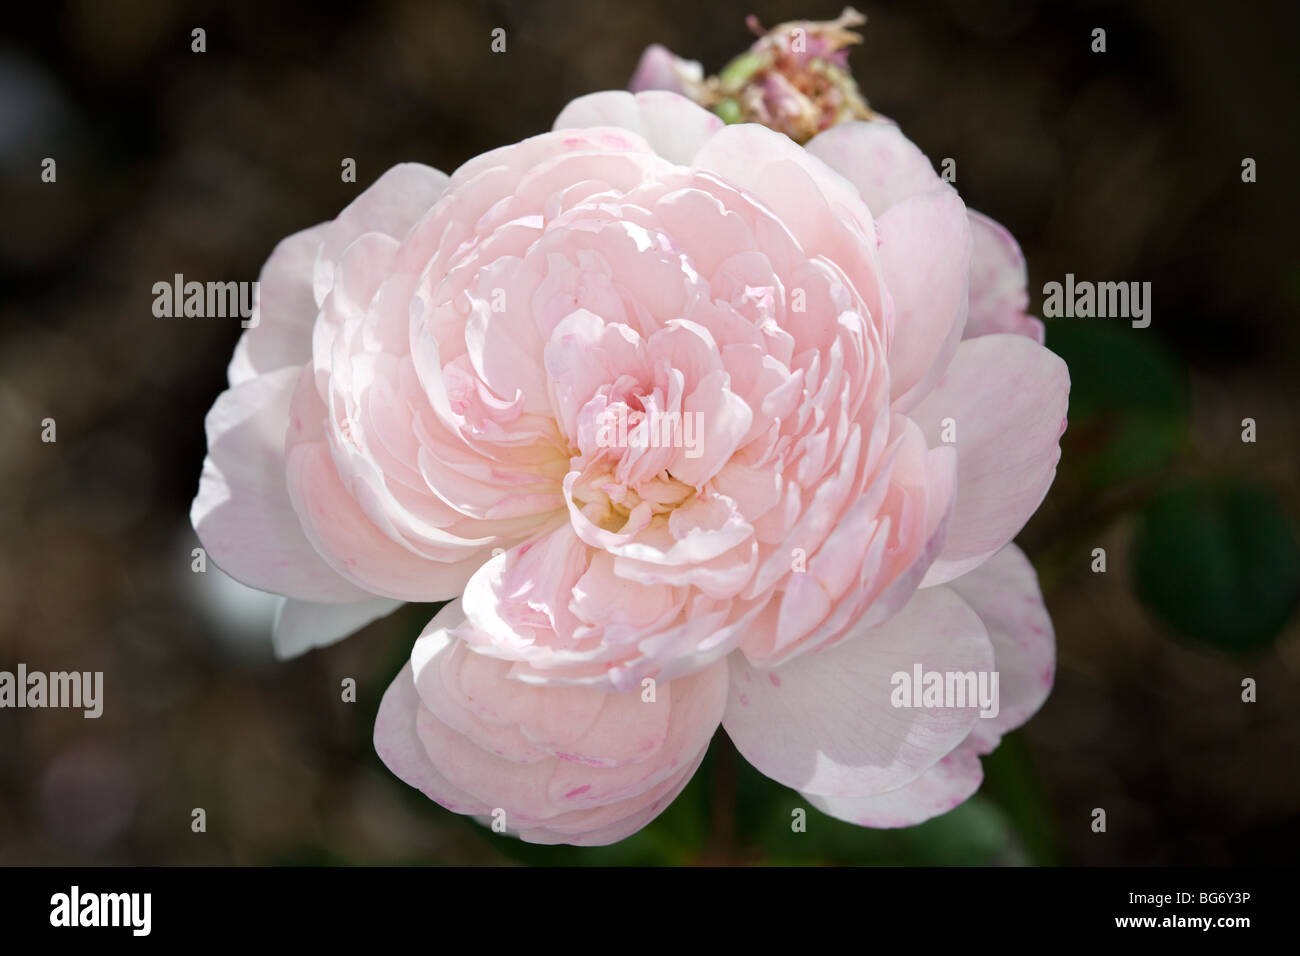 Eglantyne High Resolution Stock Photography and Images - Alamy